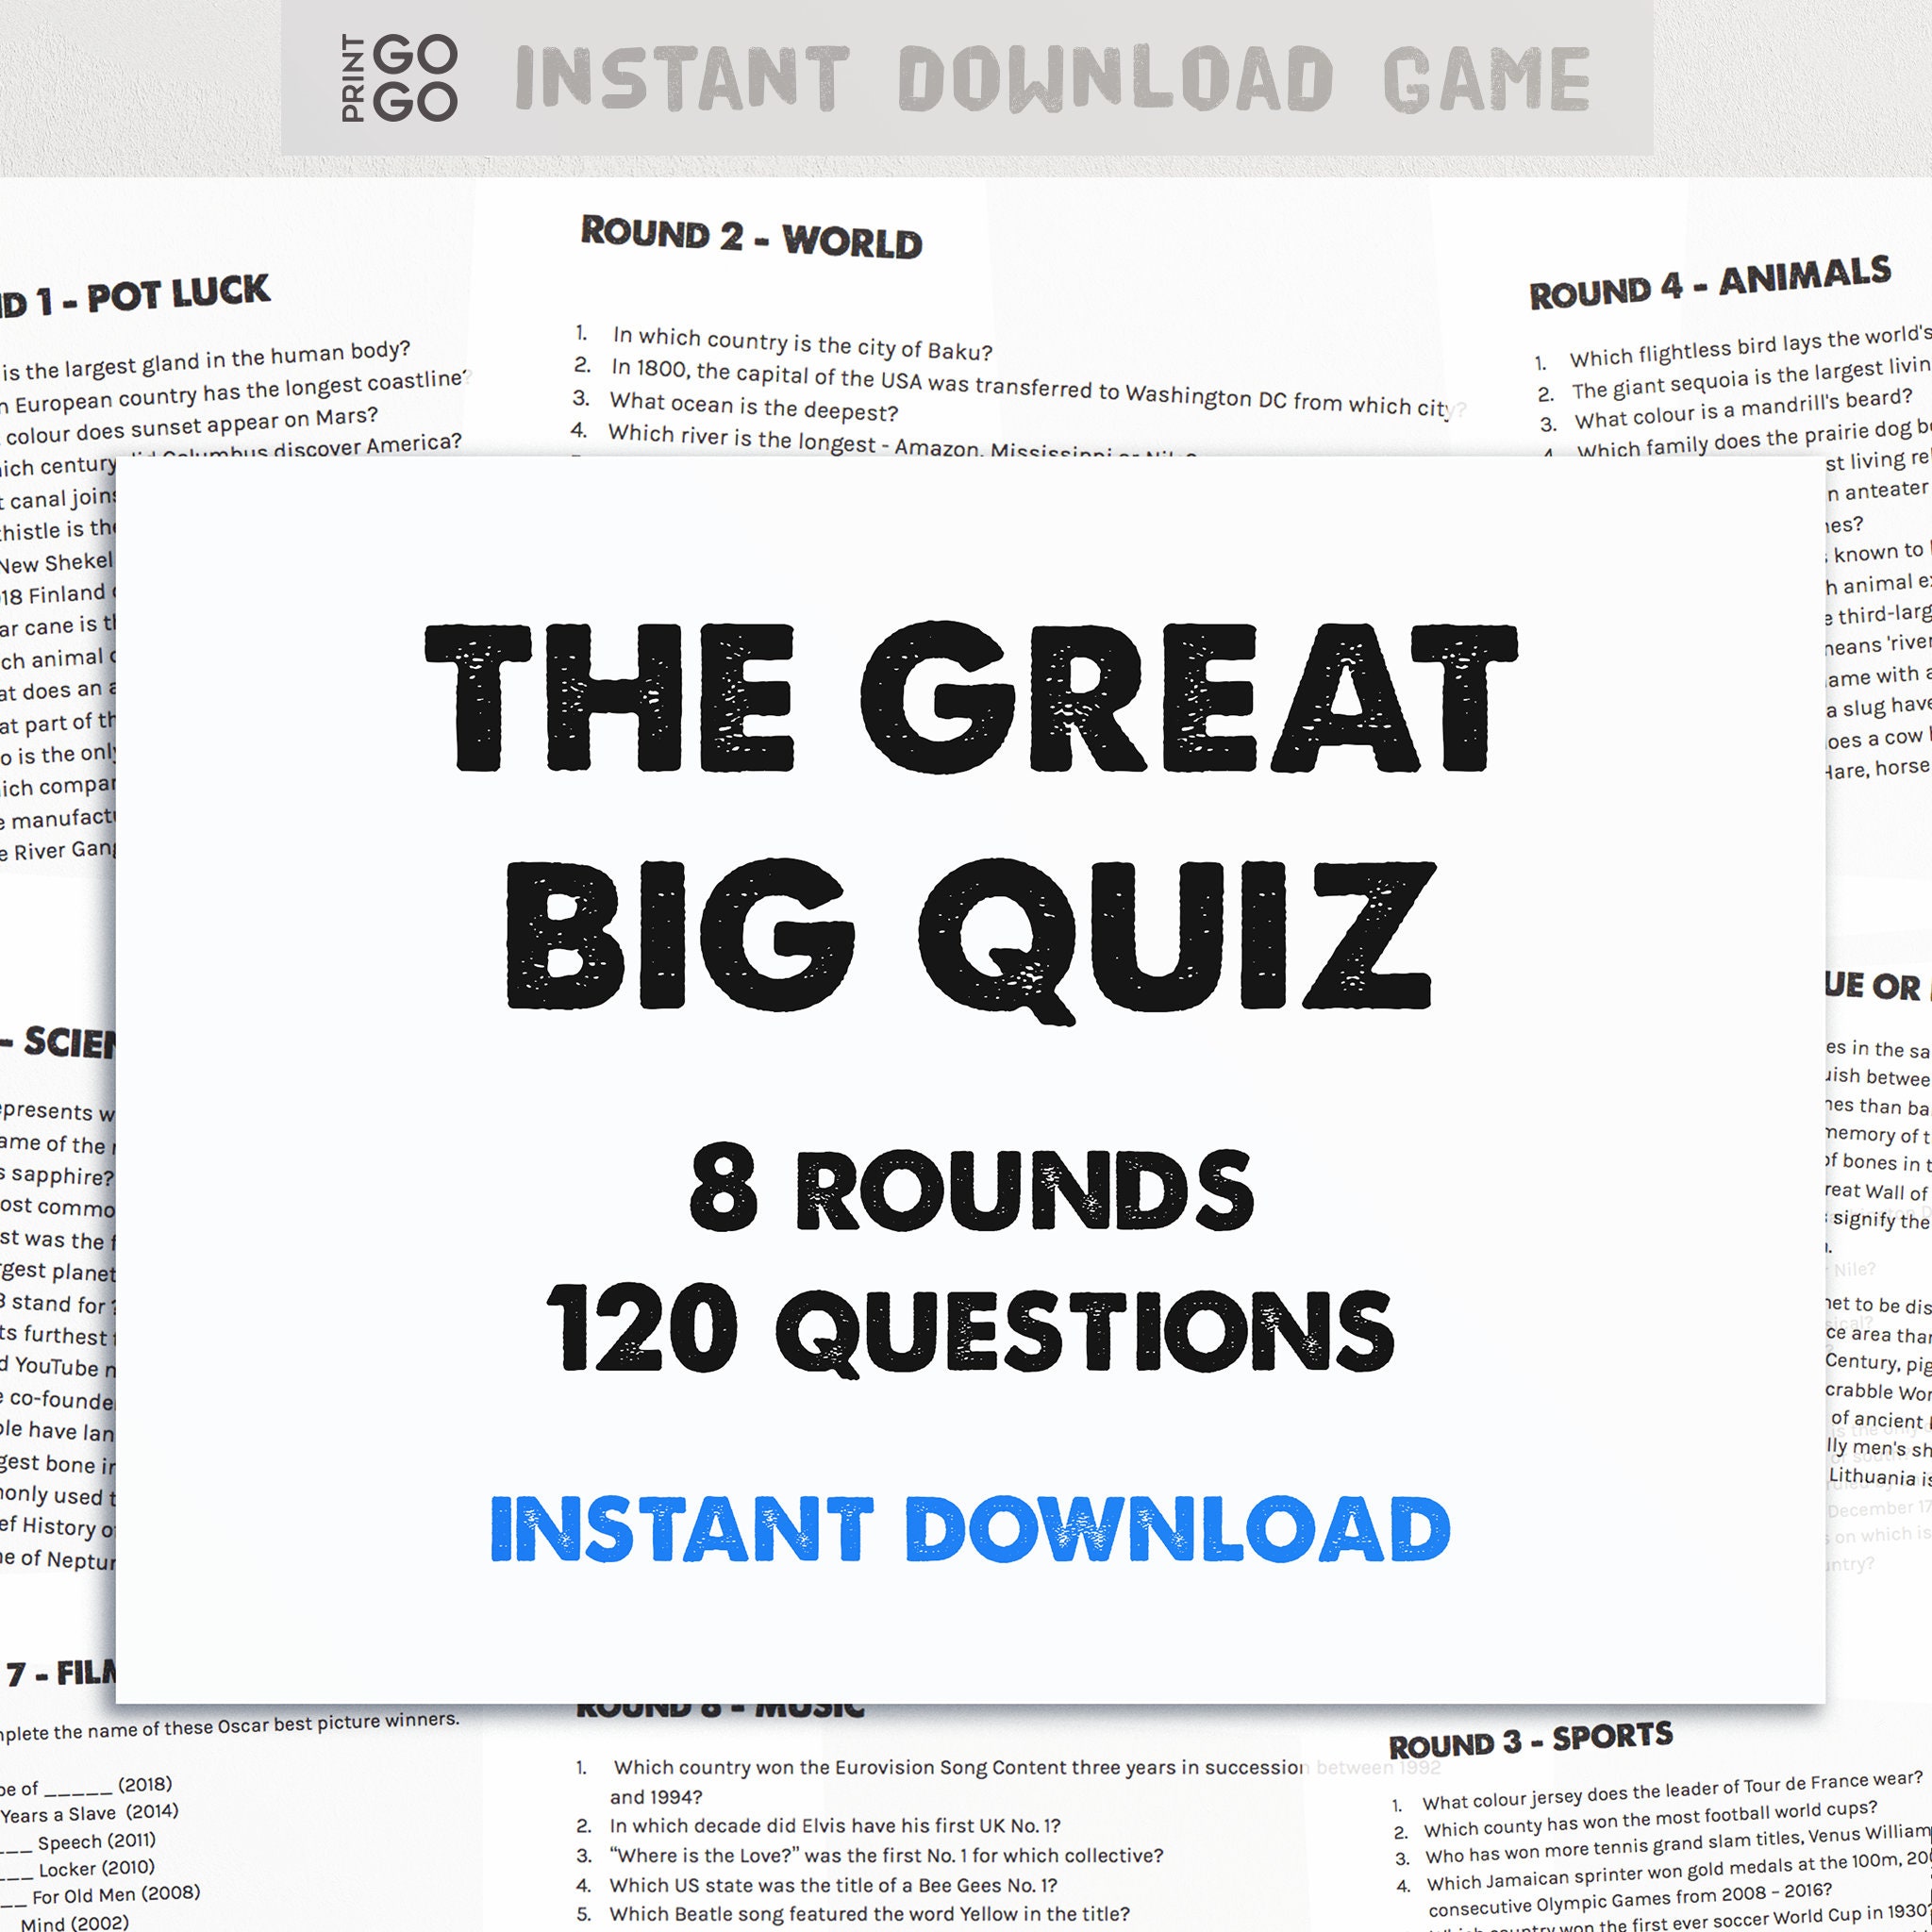 120 Best Trivia Questions in 12 Popular Categories (2023 List)